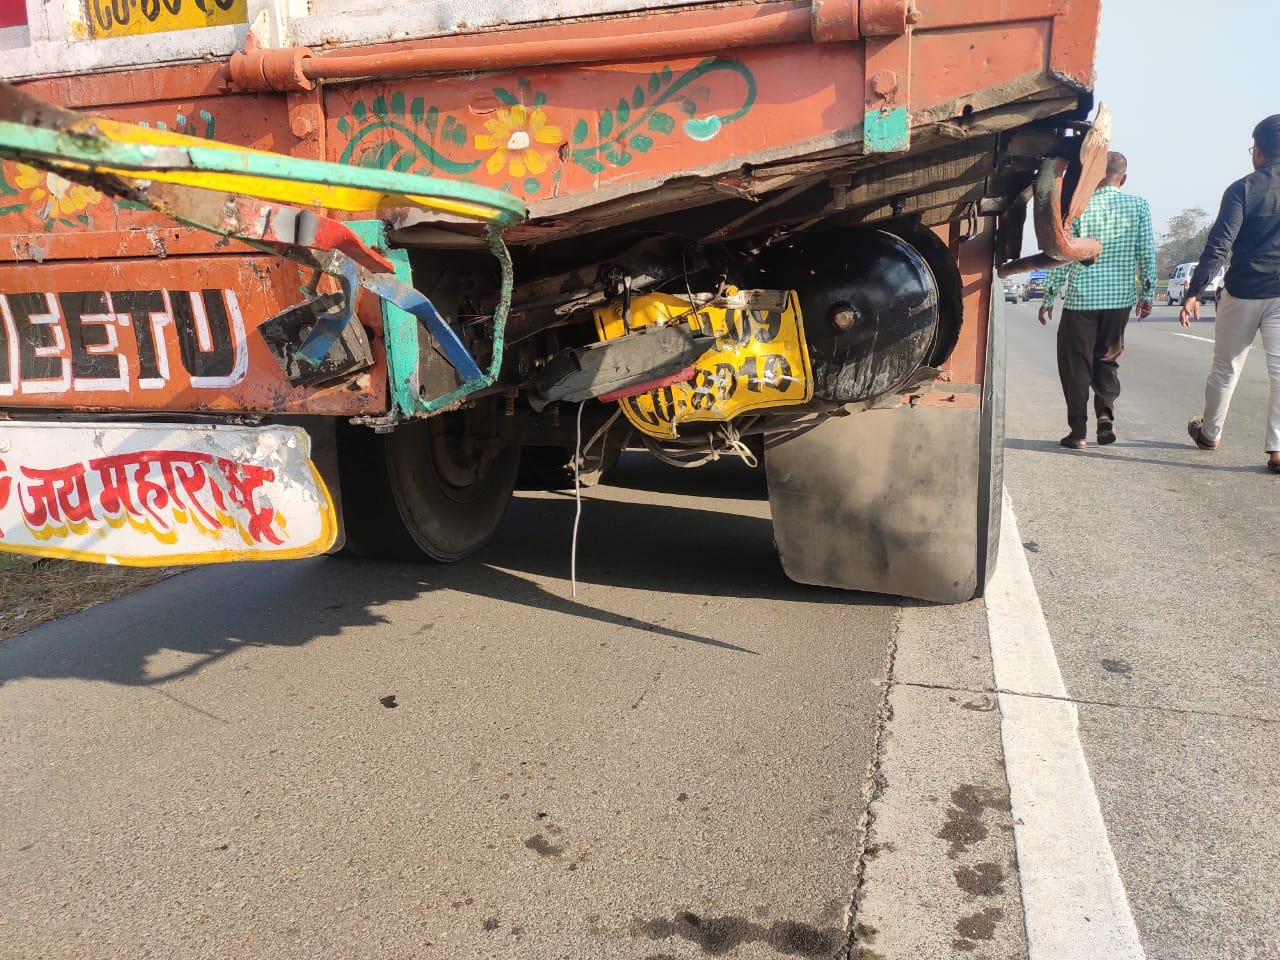 Shabana Azmi: Javed Akhtar Wife Shabana Azmi Car Mumbai-Pune Highway Accident Today